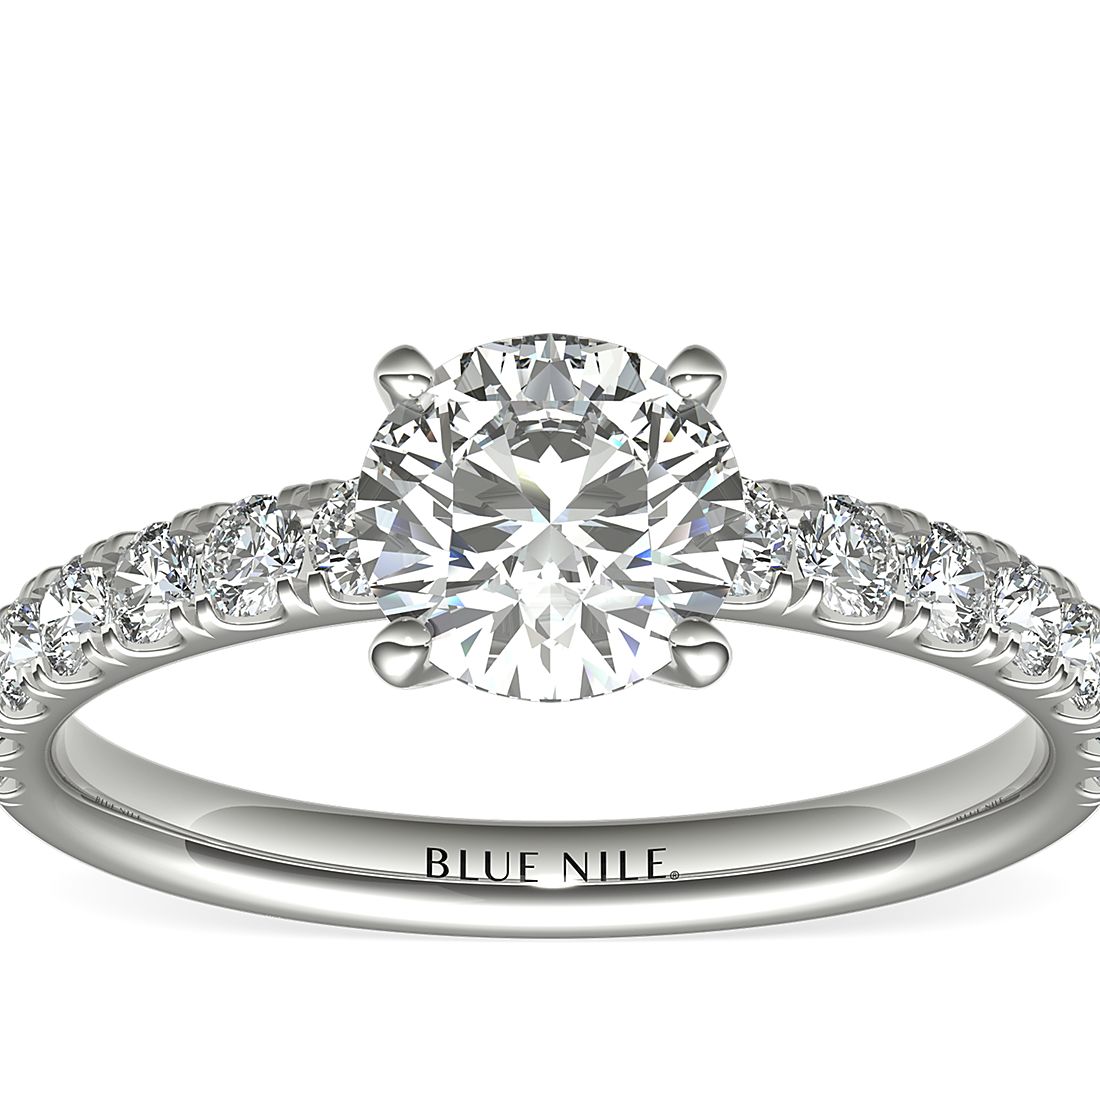 Scalloped Pavé Diamond Engagement Ring in Platinum